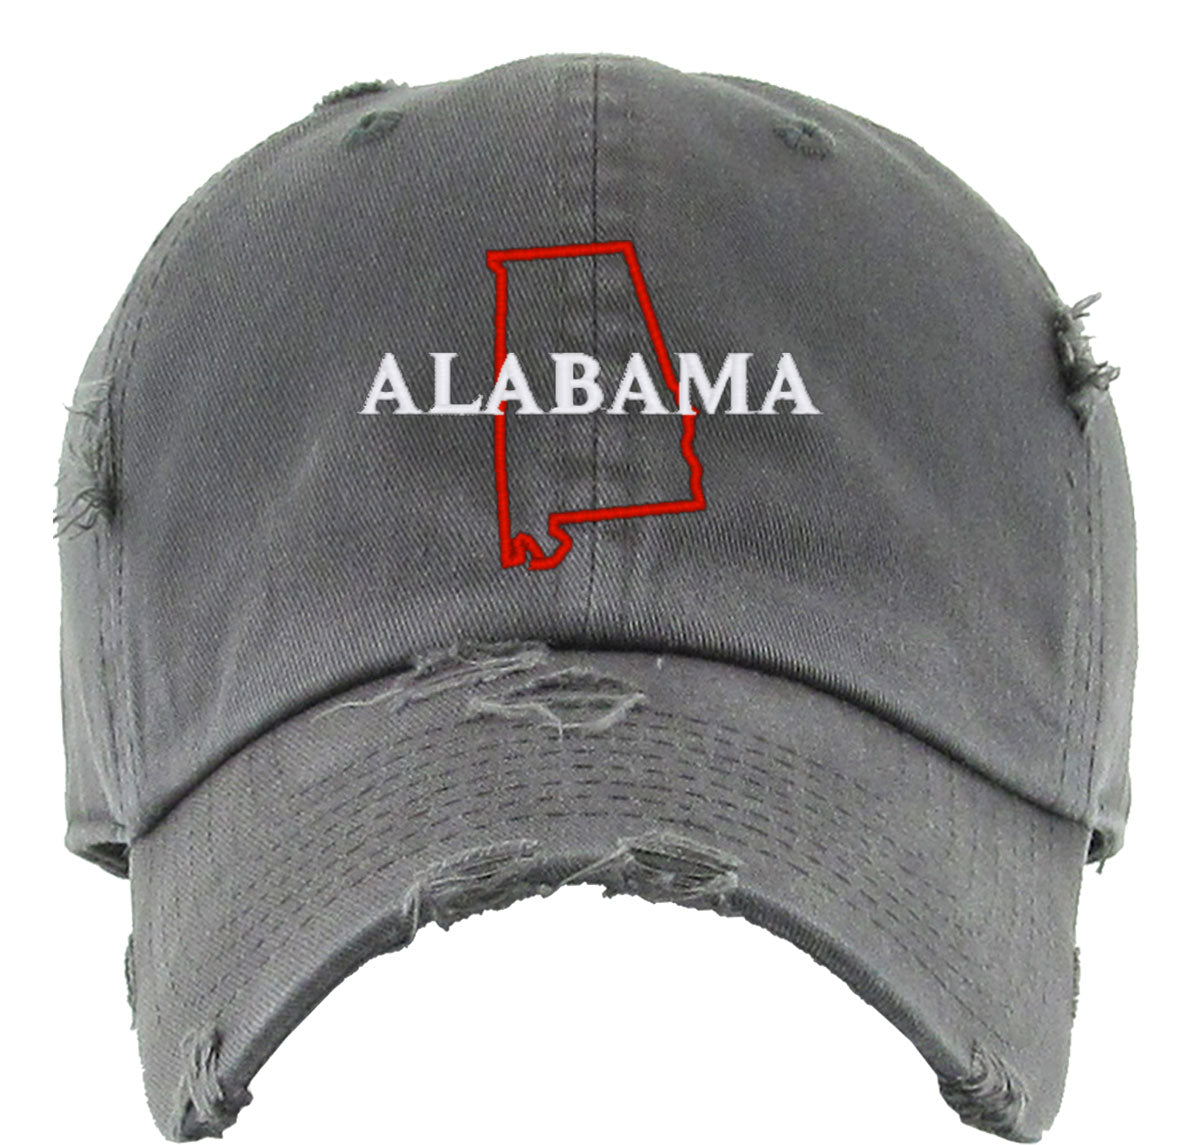 Alabama Vintage Baseball Cap